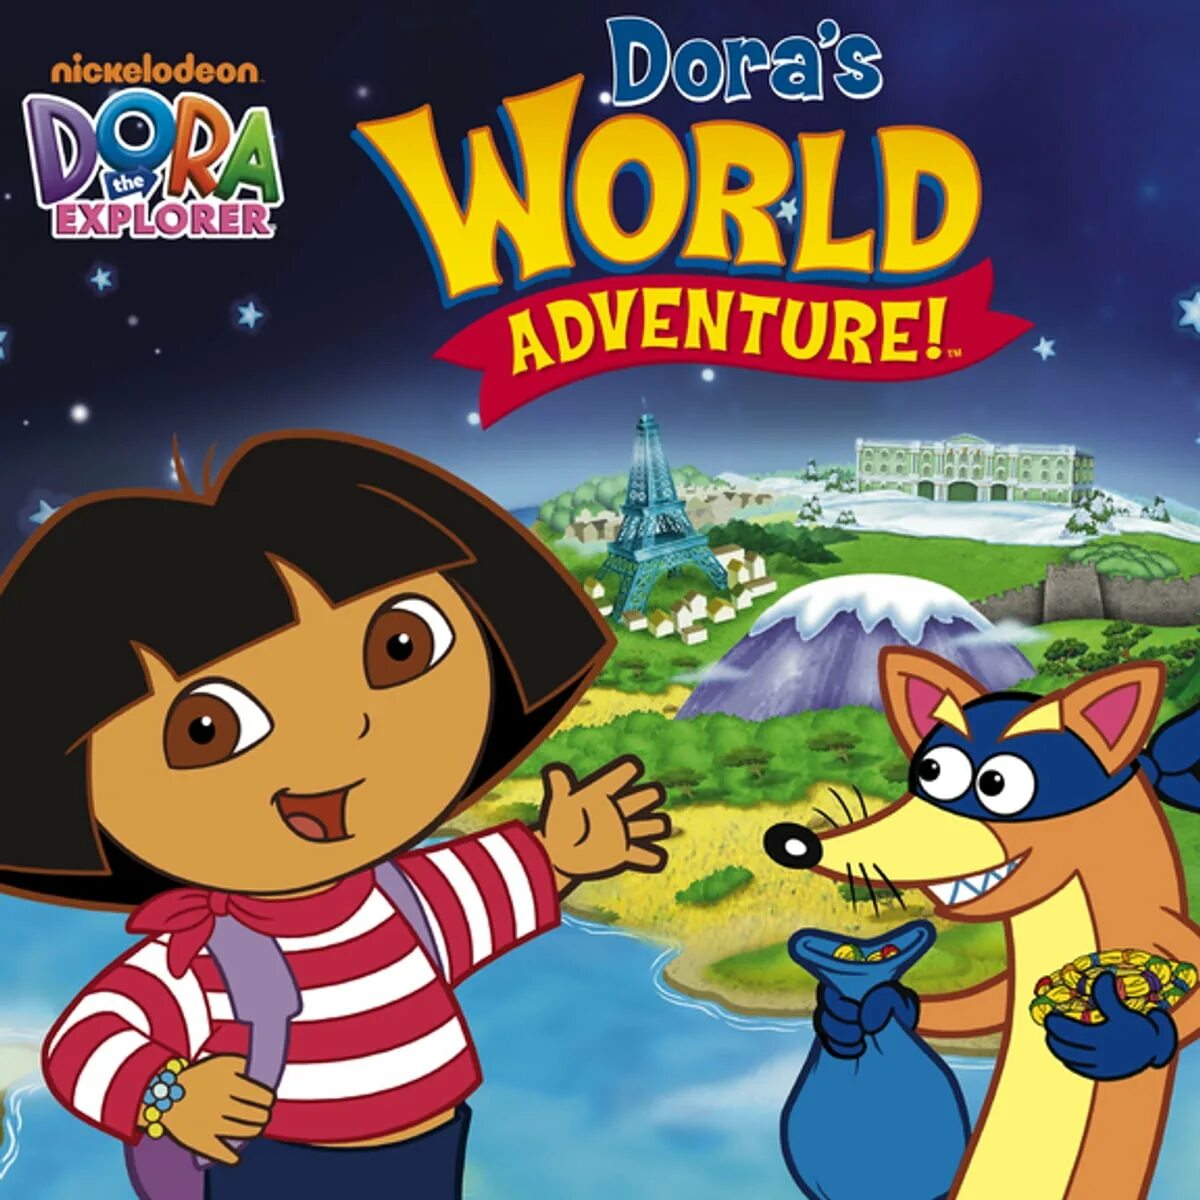 Doras world adventure. Dora Adventure. Dora the Explorer Dora's World Adventure. GBA Dora the Explorer Dora's World Adventure.